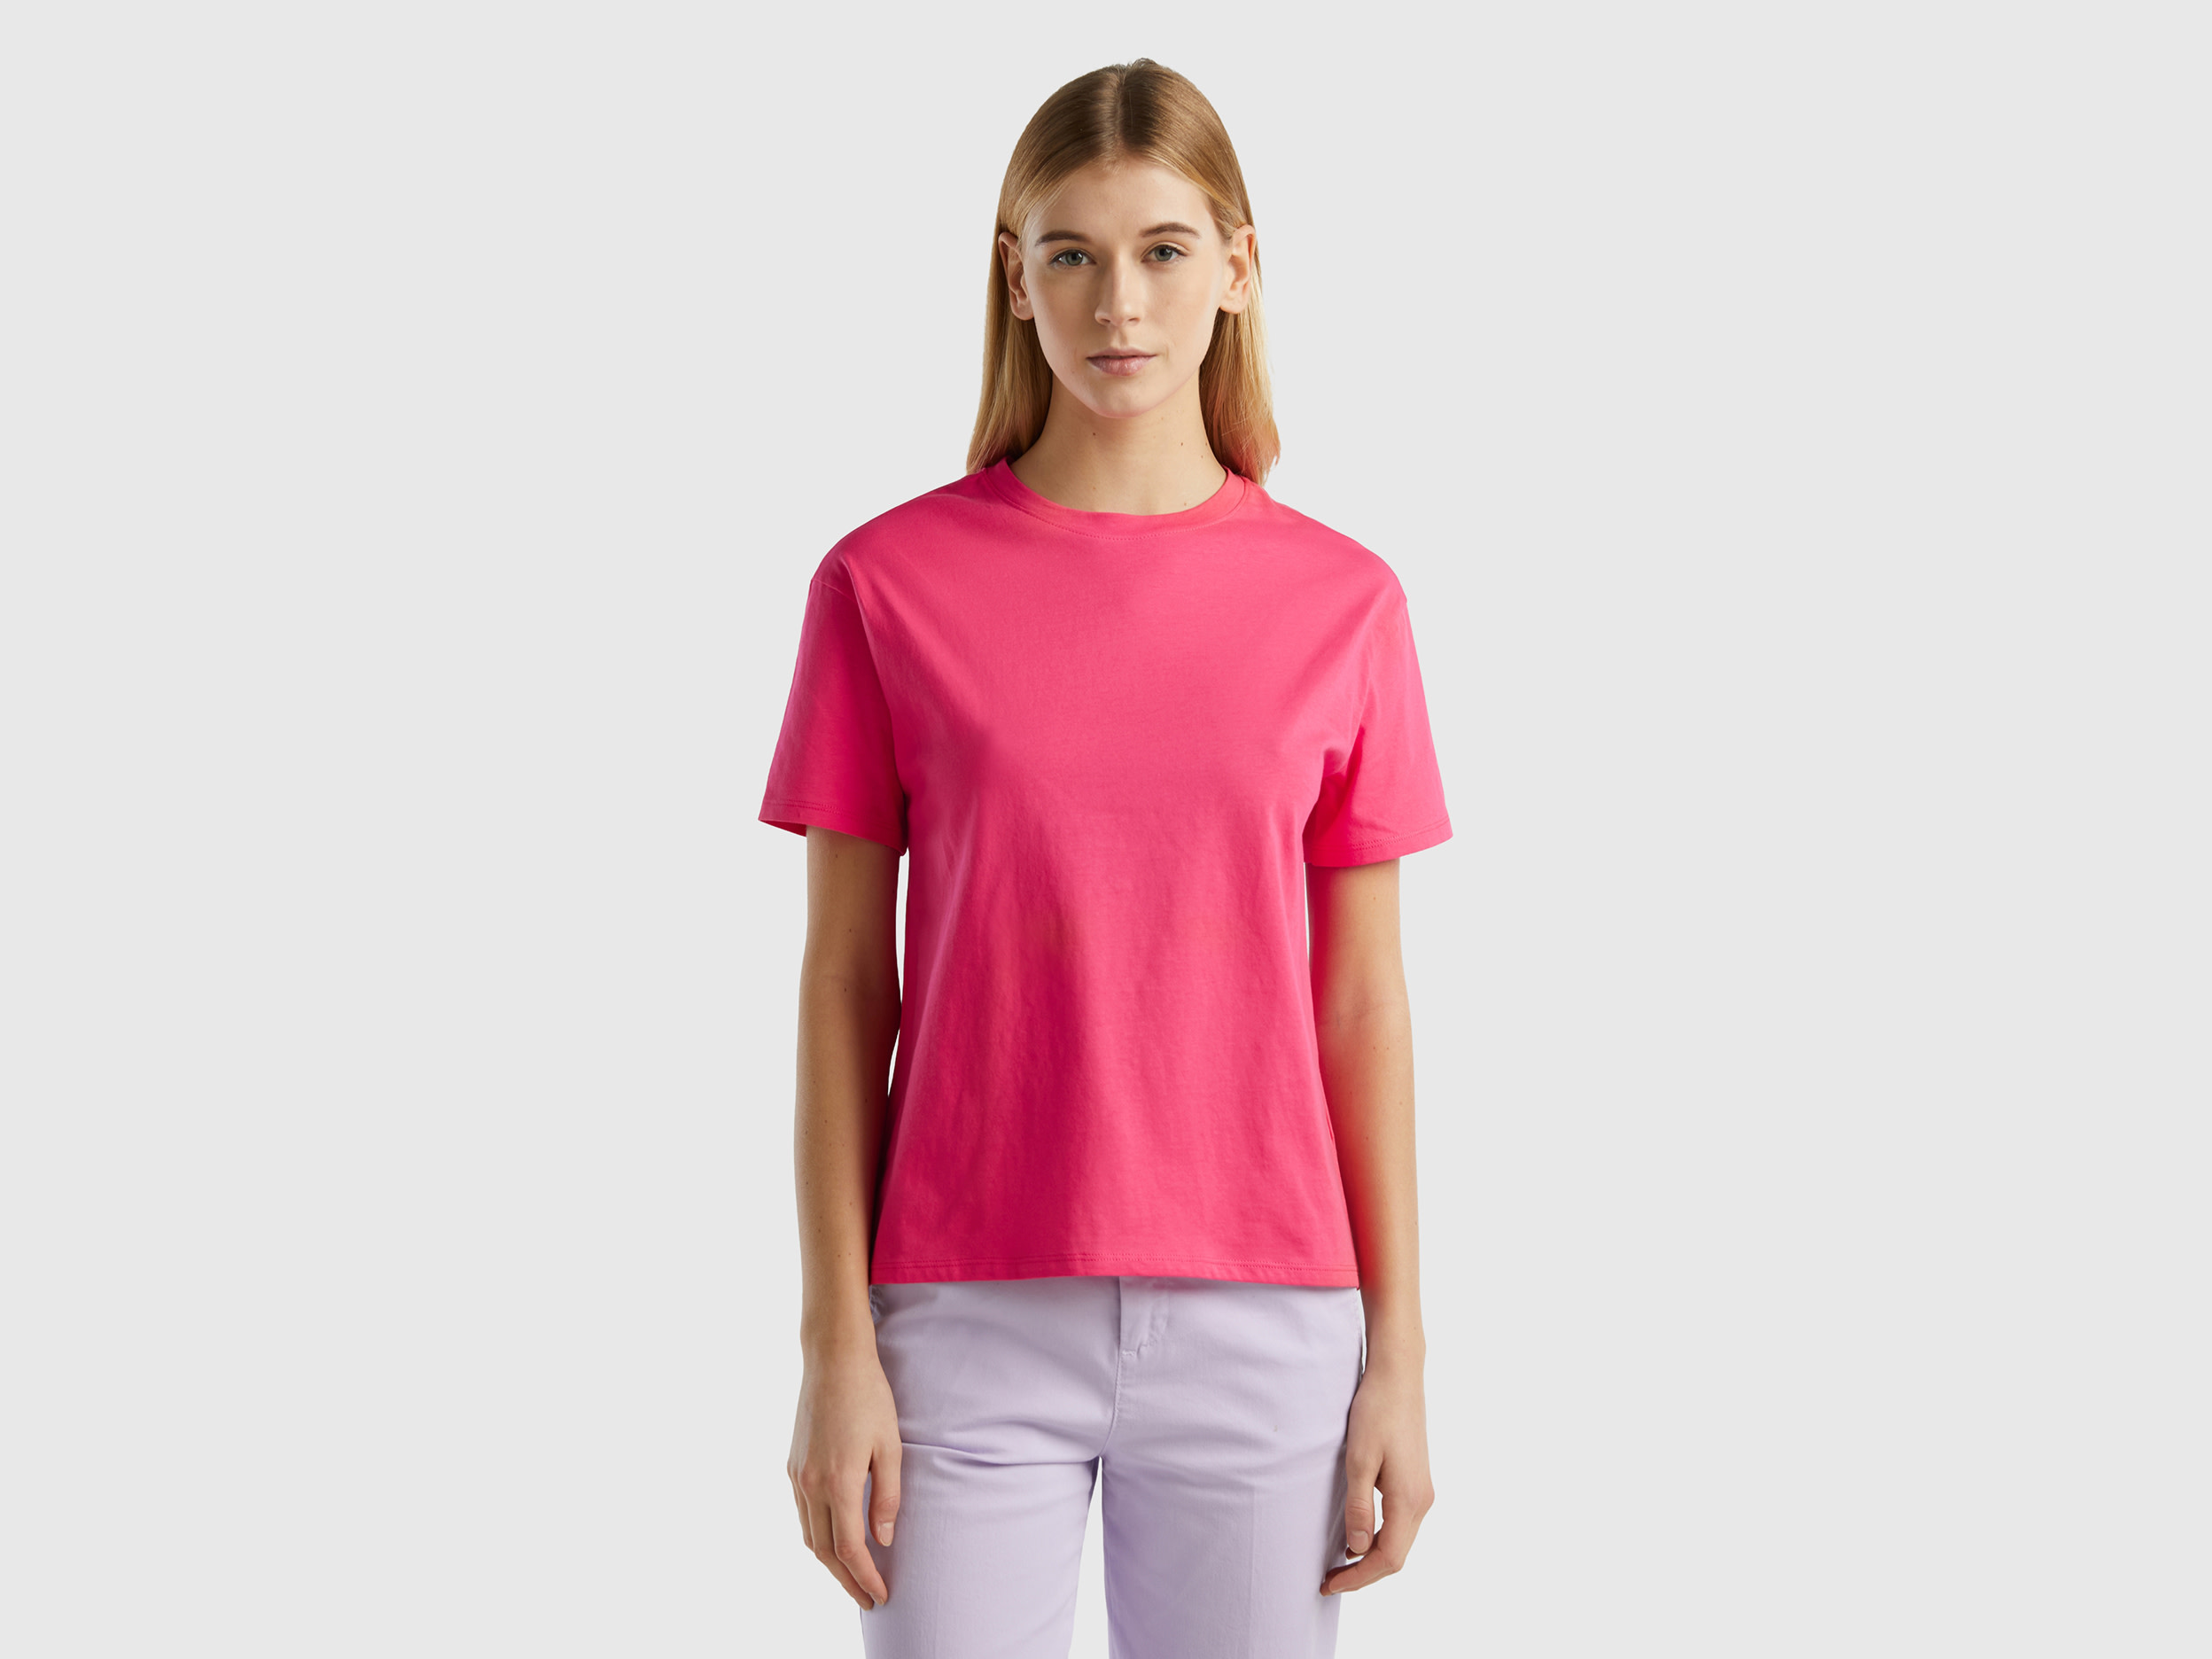 Benetton, Short Sleeve 100% Cotton T-shirt, size M, Fuchsia, Women